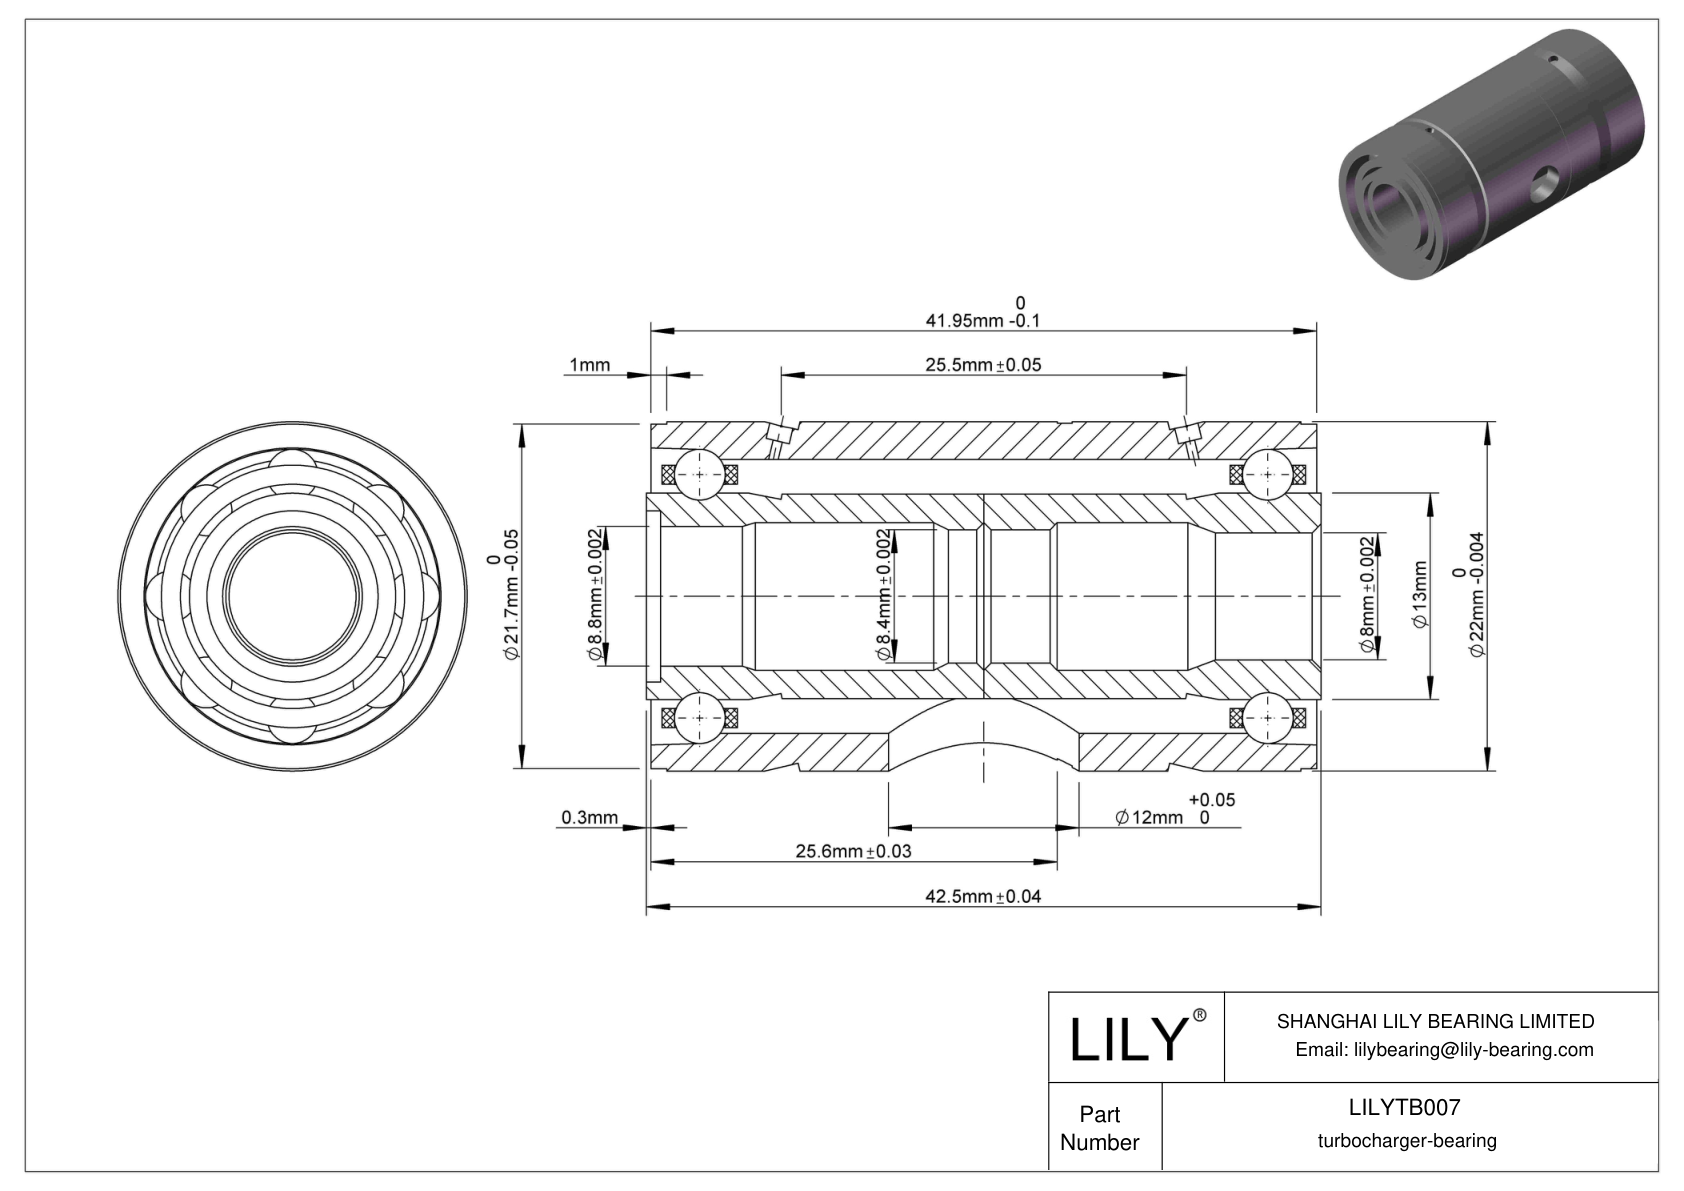 LILYTB007 Turbocharger Bearings cad drawing